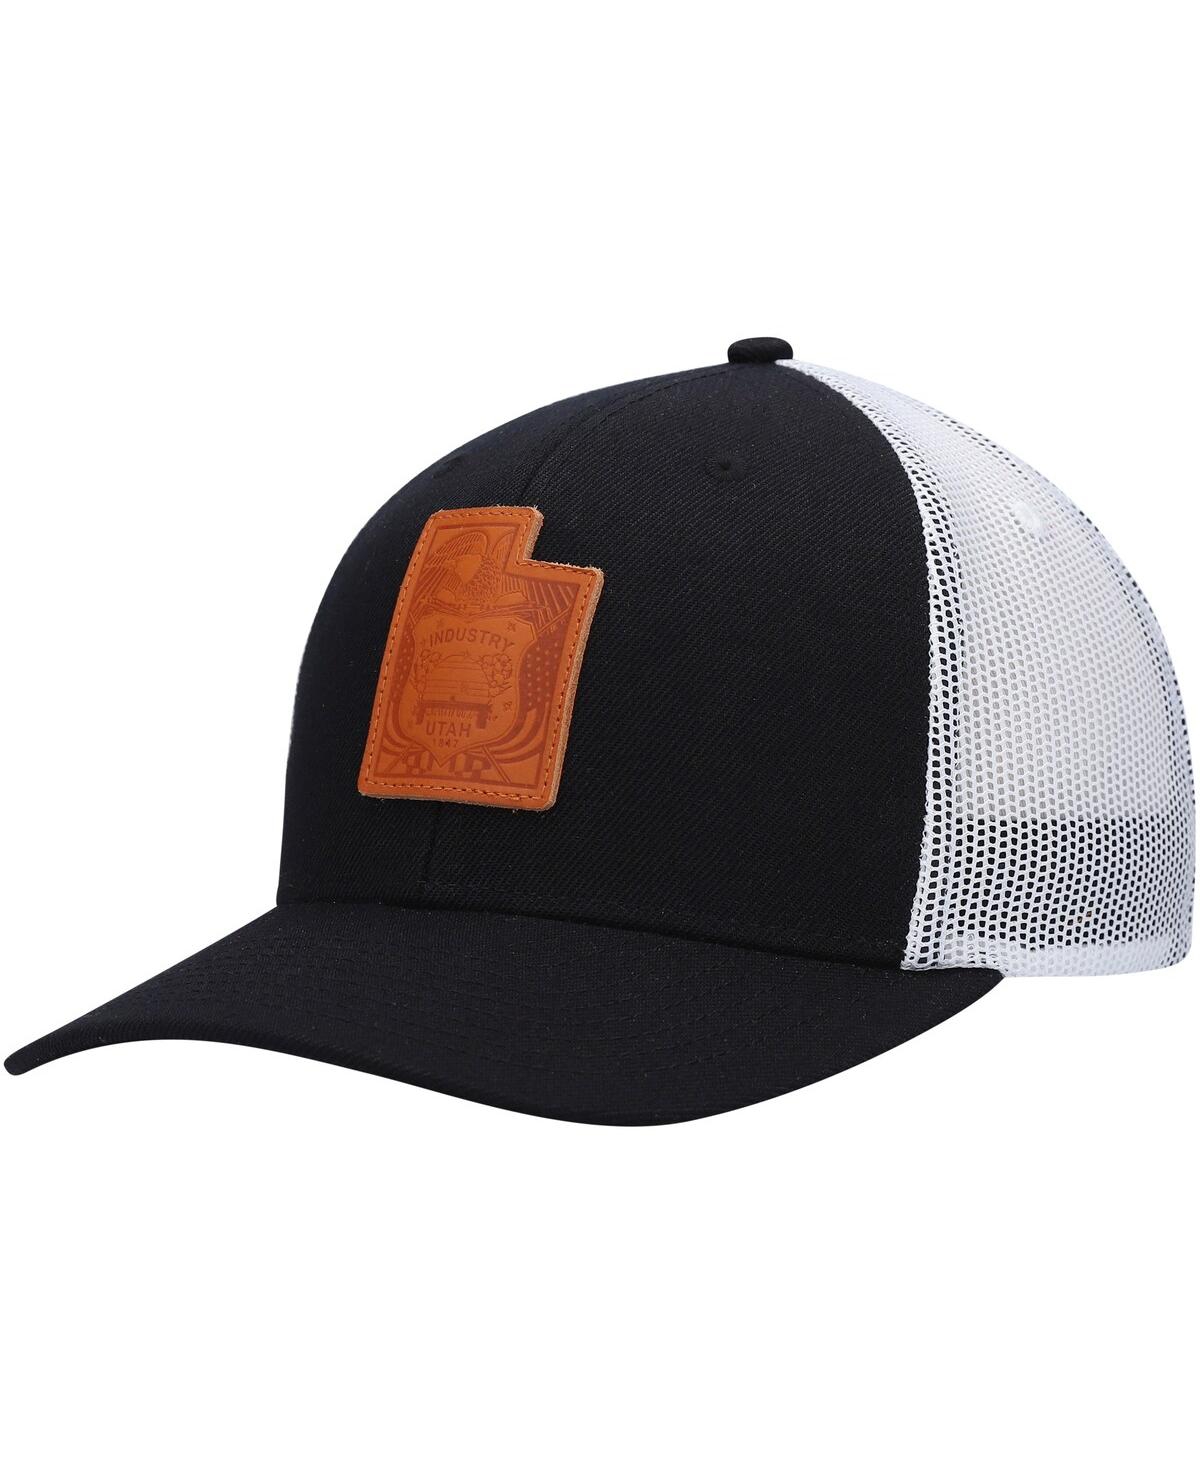 Men's Local Crowns Black Utah Leather State Applique Trucker Snapback Hat - Black